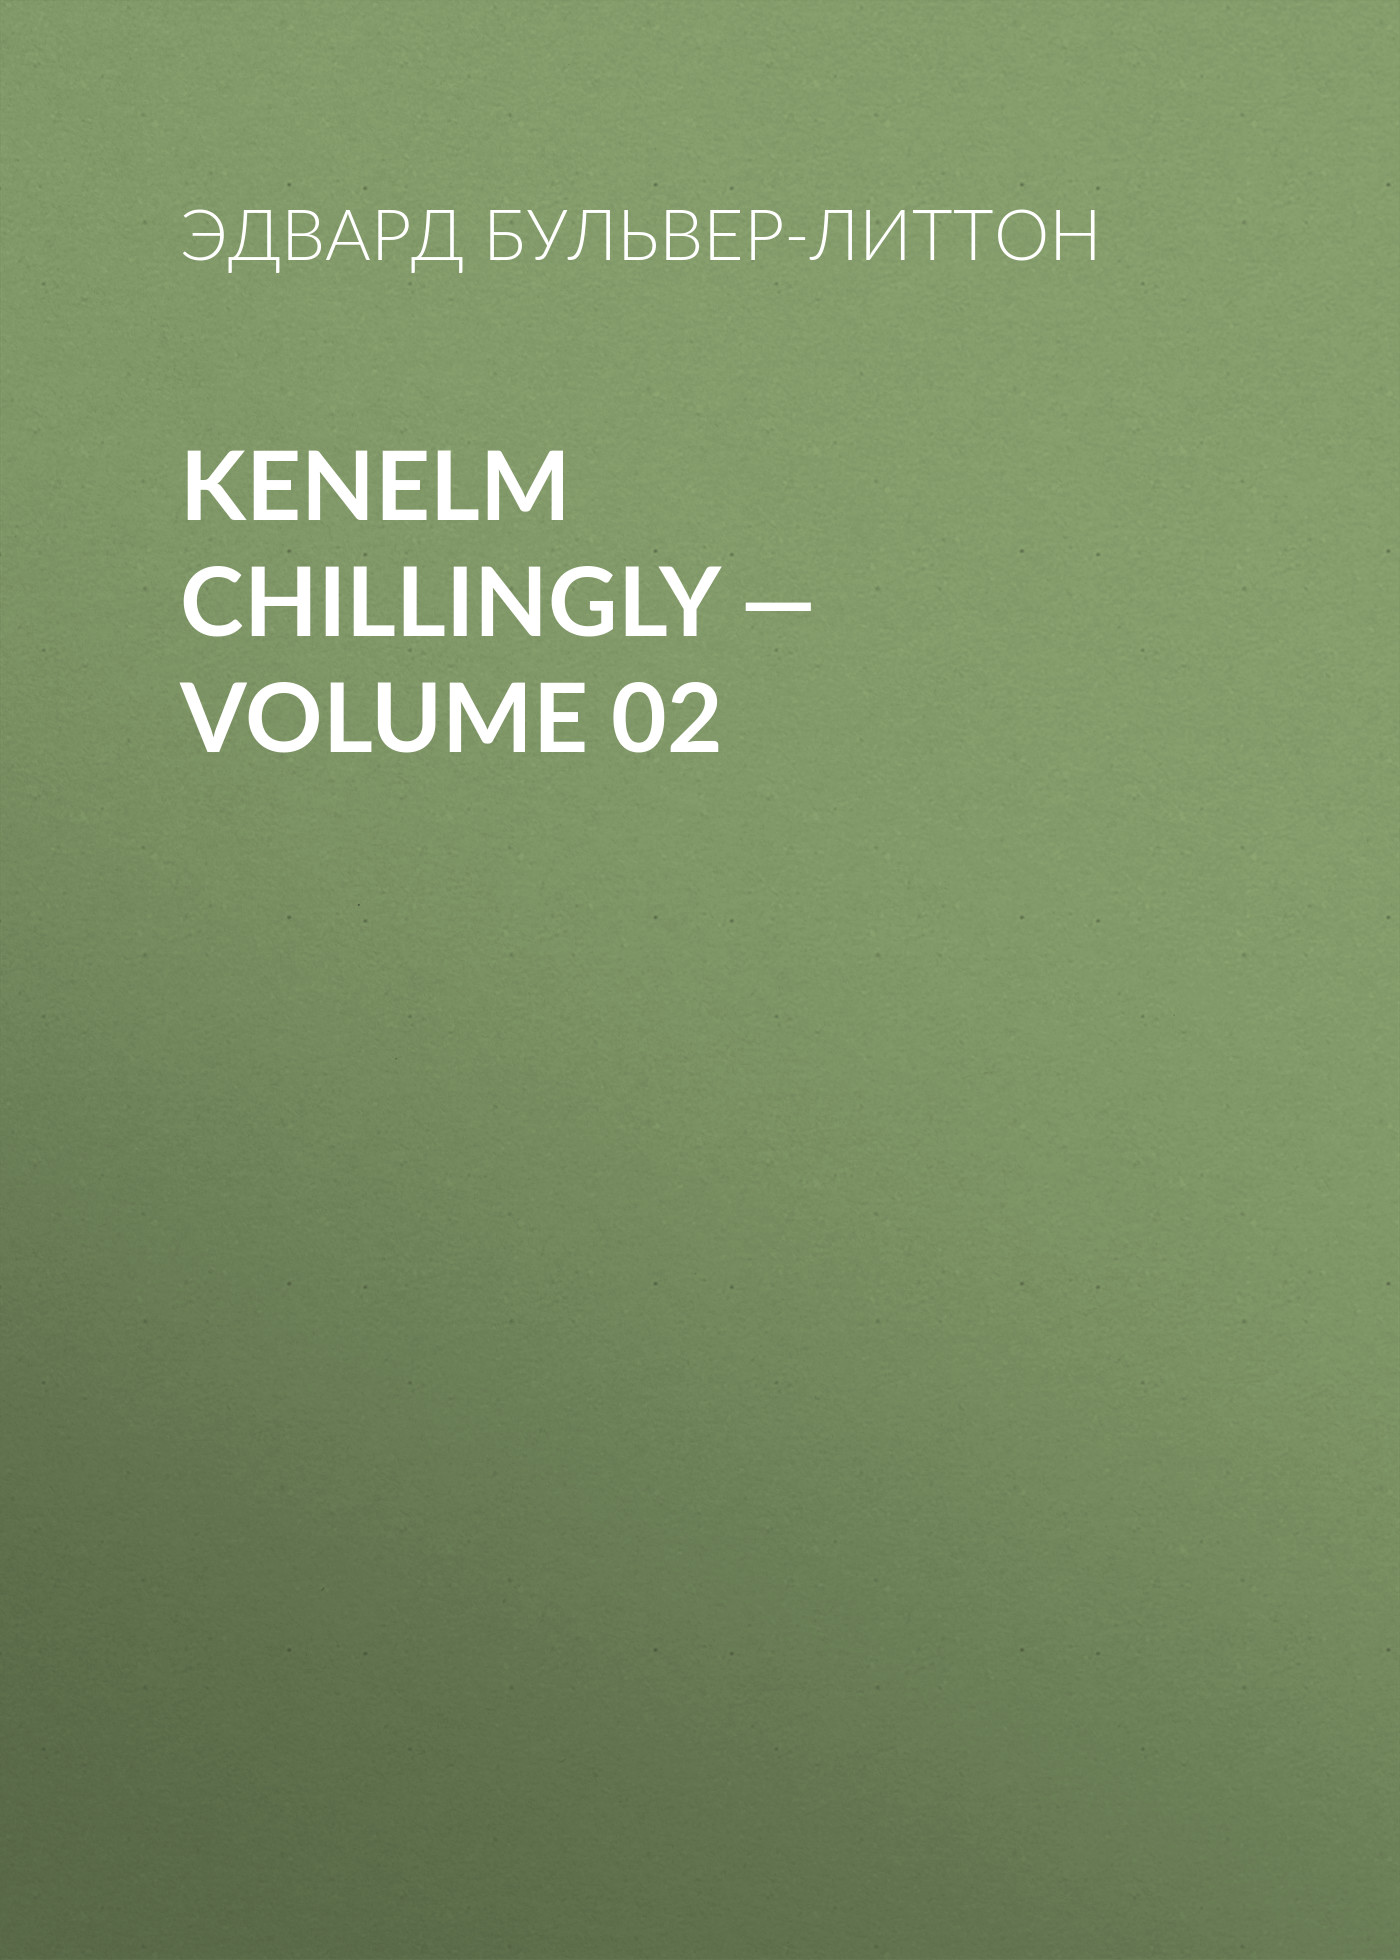 Kenelm Chillingly— Volume 02